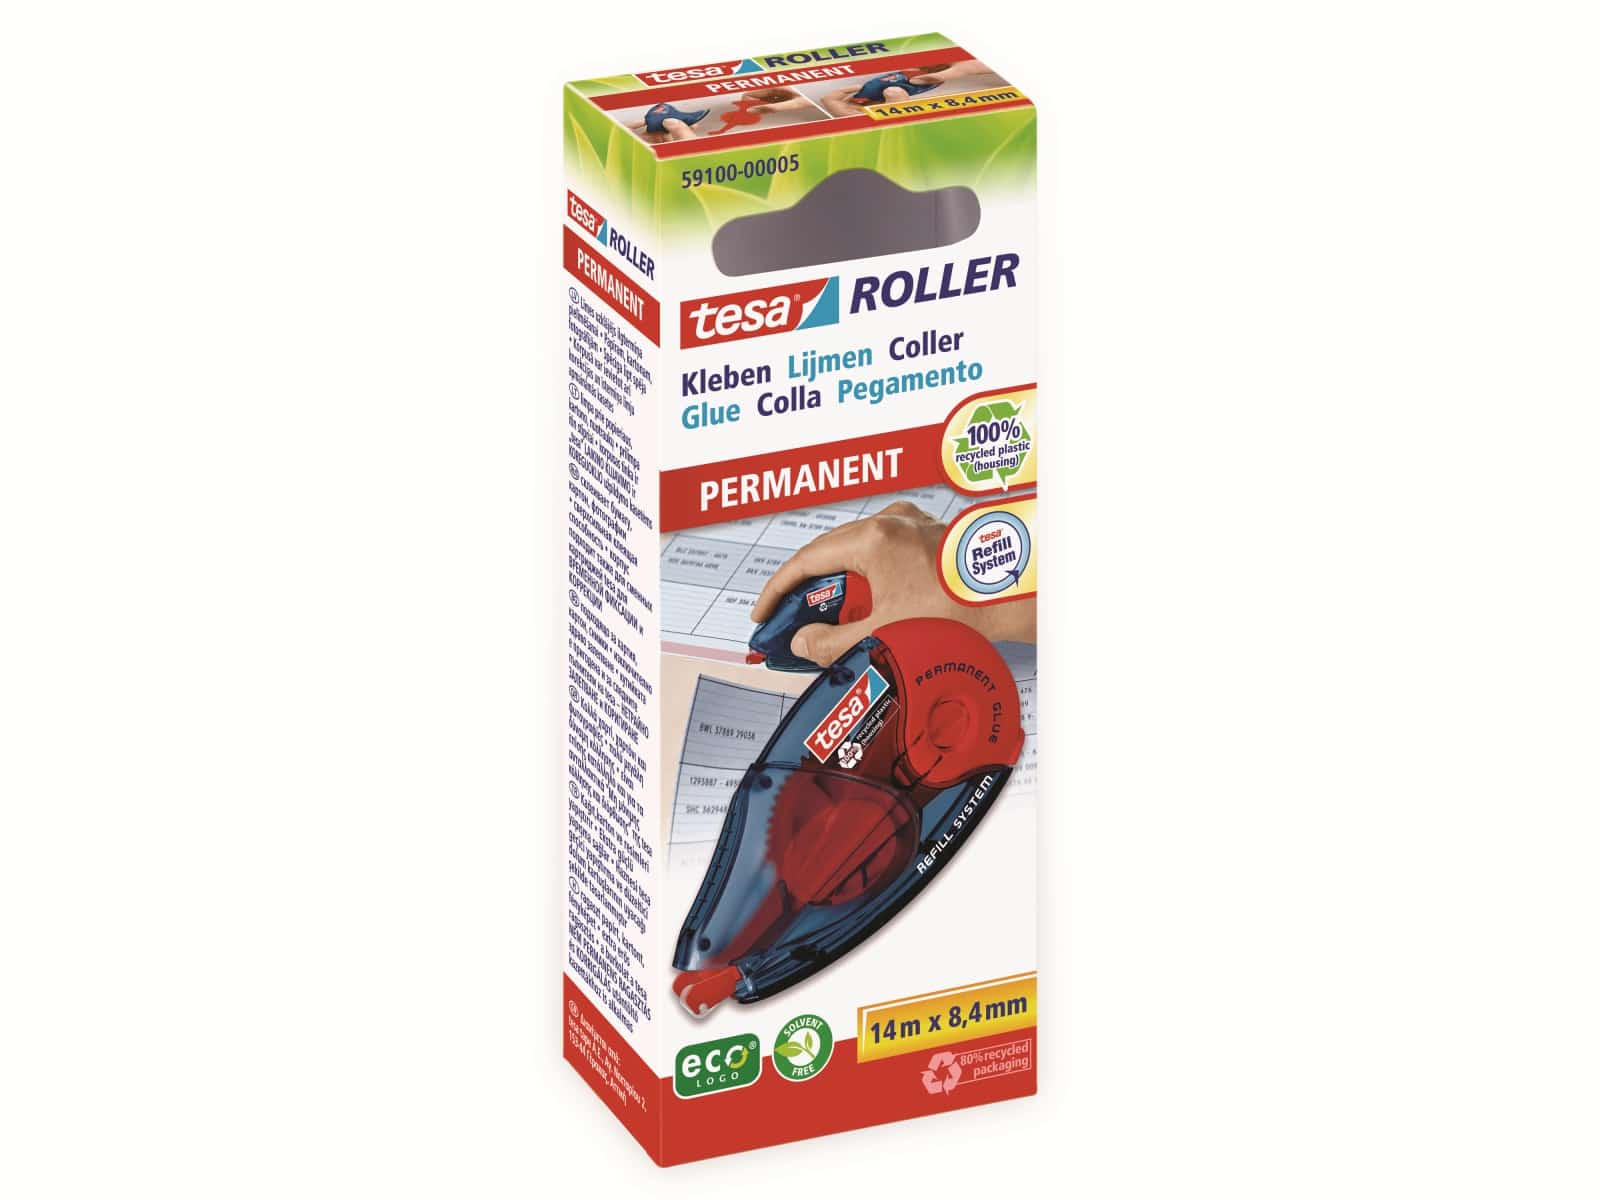 TESA ® Roller Kleben permanent ecoLogo®, Nachfüllroller, 14m:8,4mm, 59100-00005-06